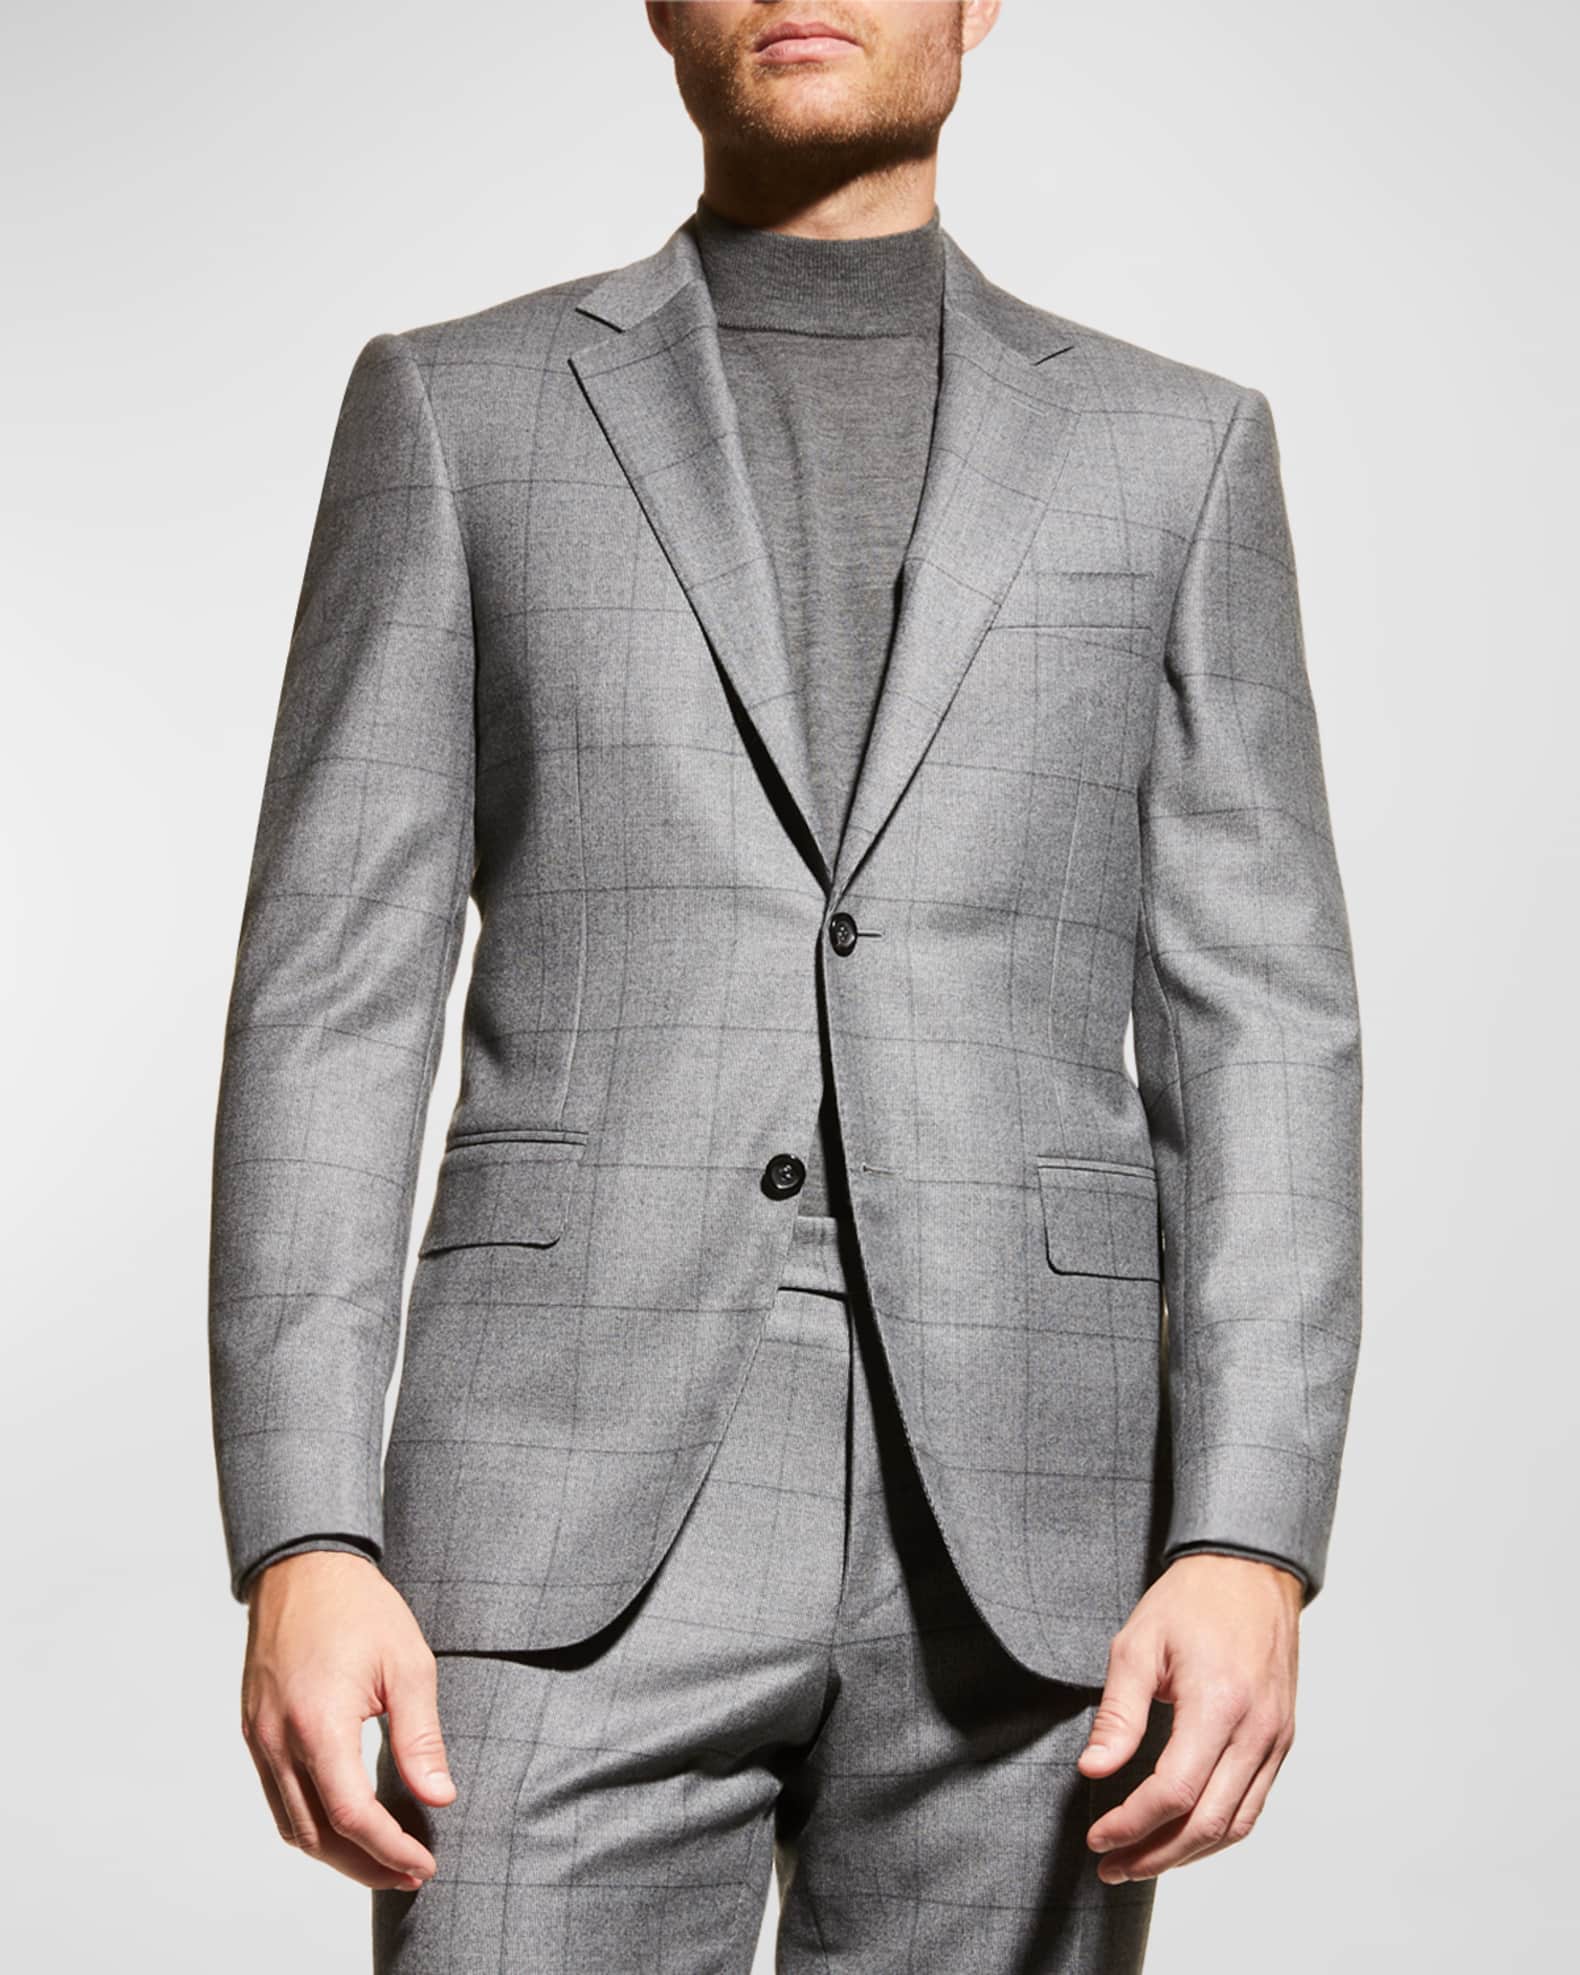 Canali Men's Windowpane Tic Suit | Neiman Marcus